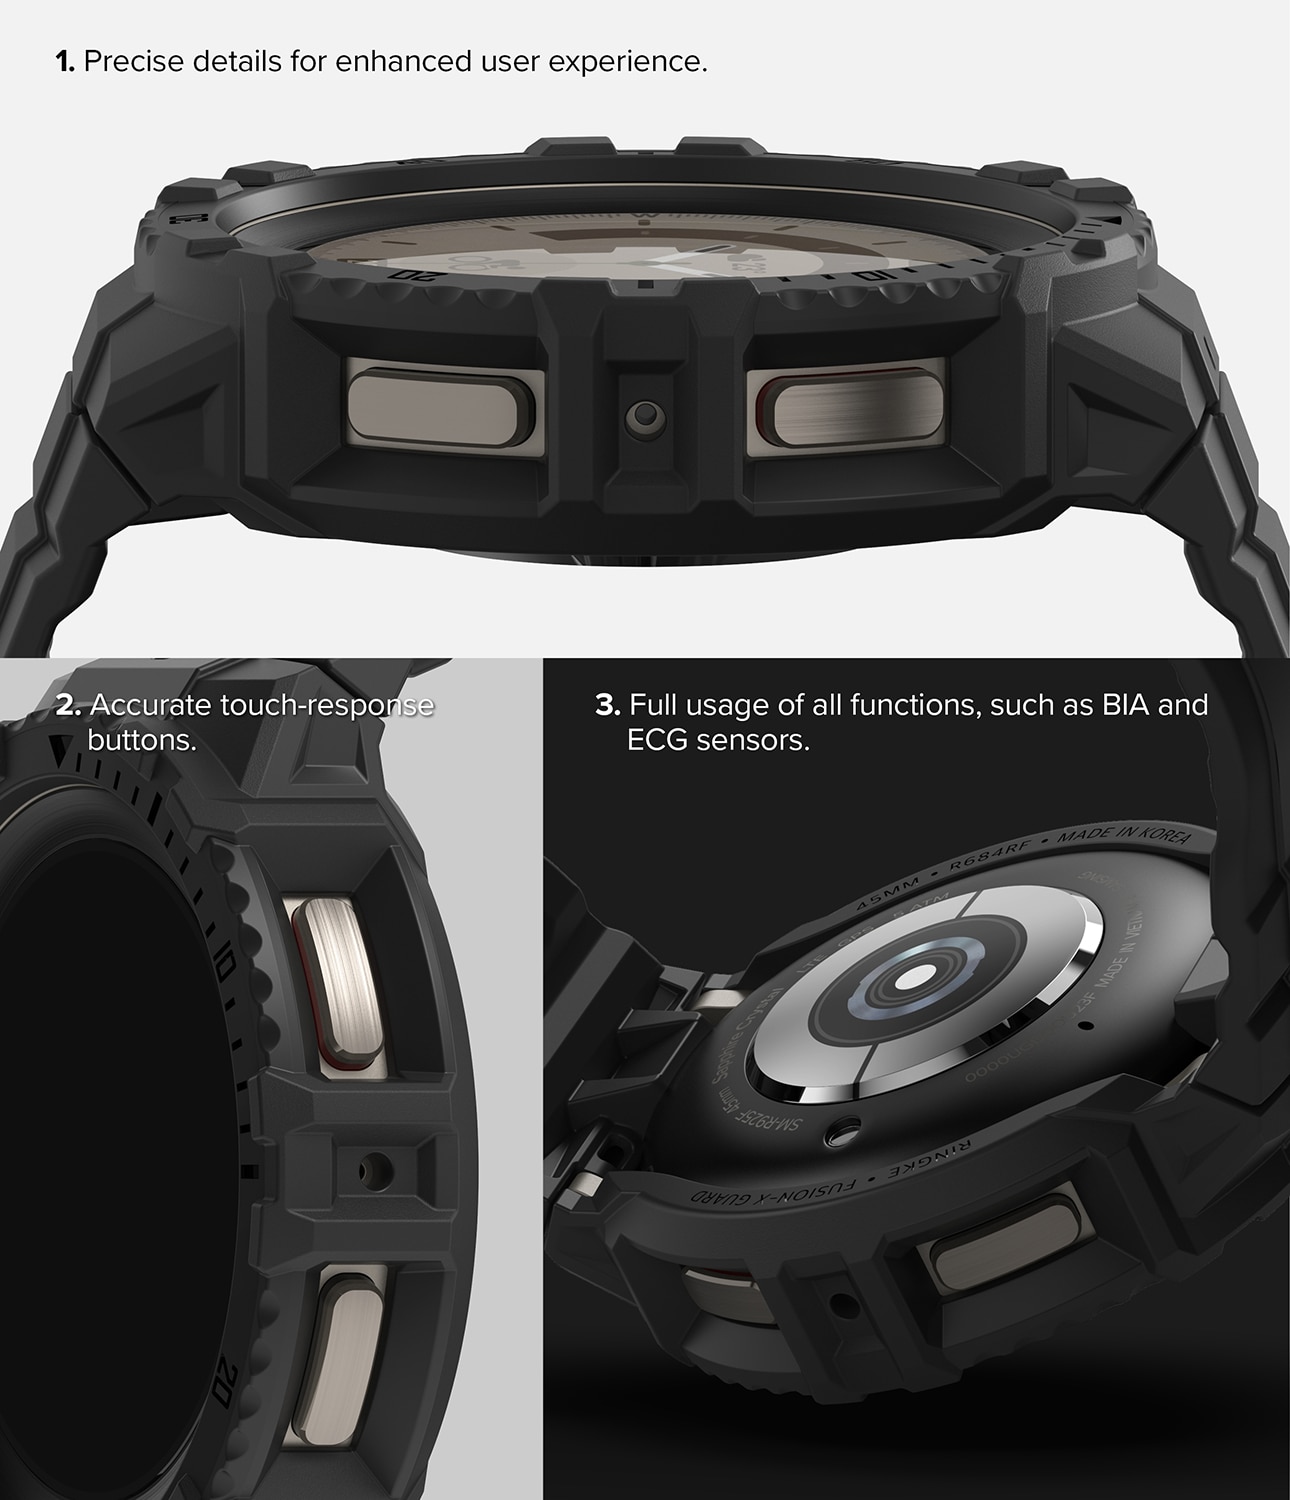 Samsung Galaxy Watch 5 Pro Fusion-X Guard Case+Band Black